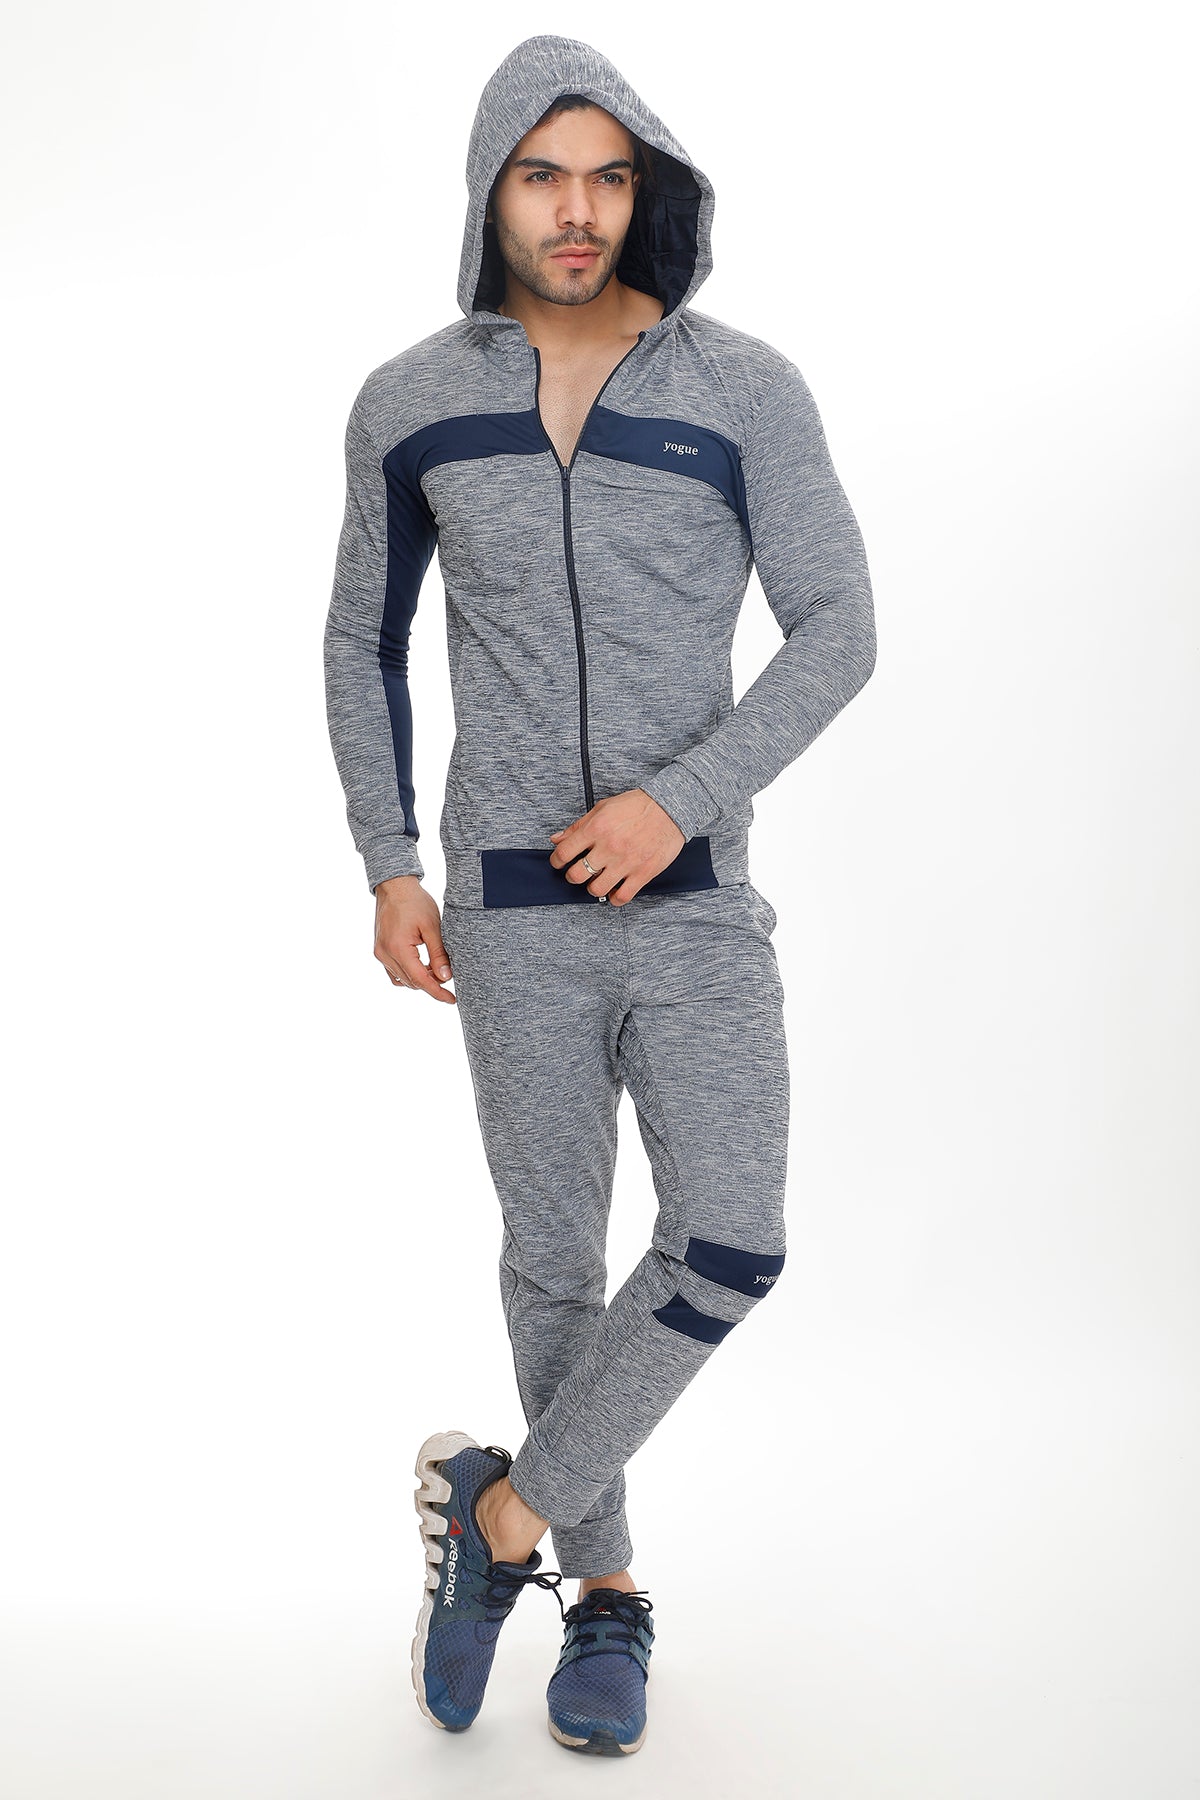 Grey Texture Tracksuit Navy Stripes - Yogue Activewear